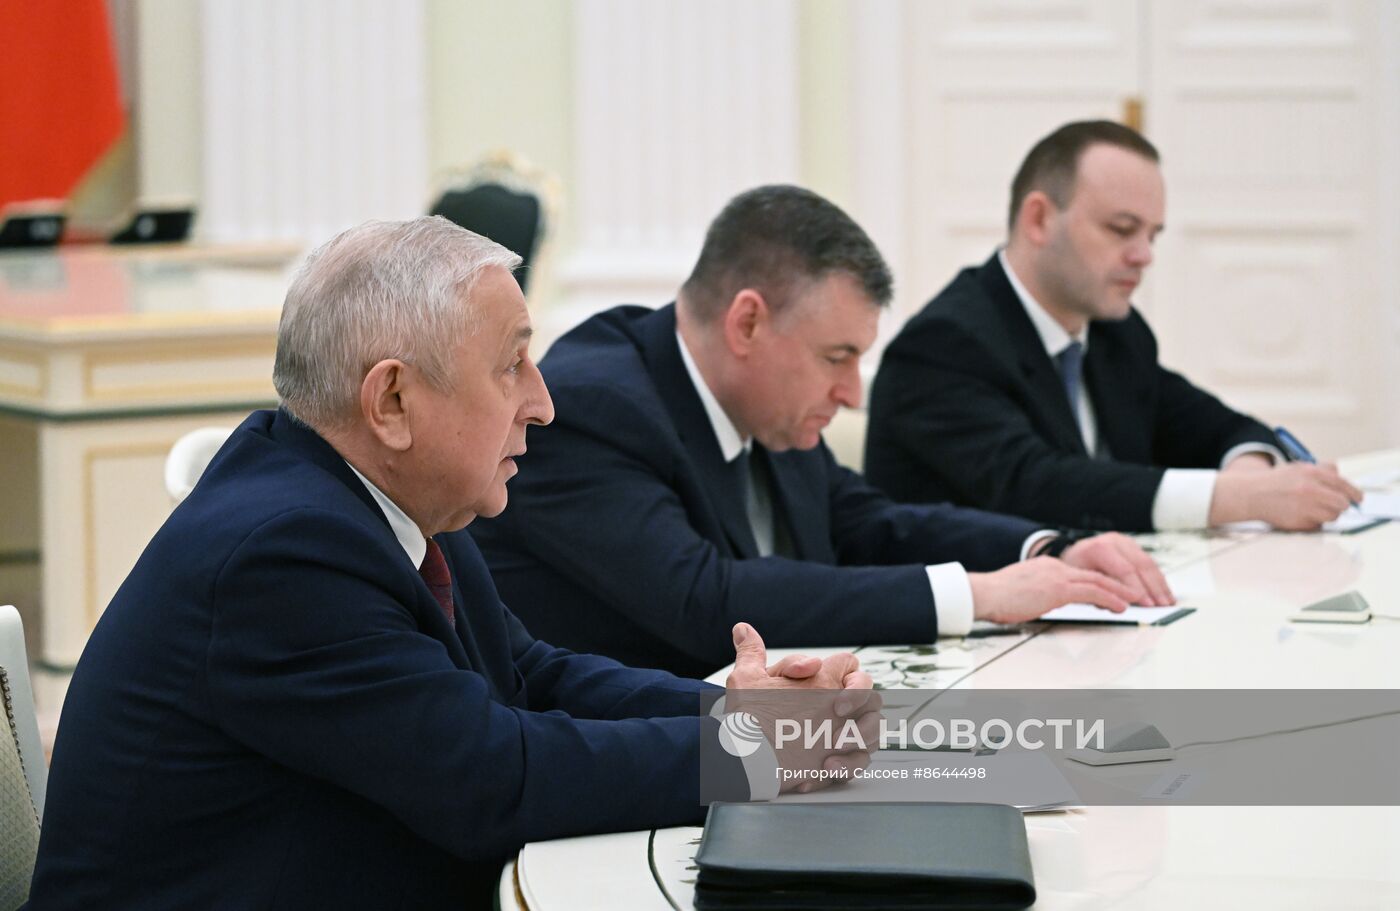 Встреча президента РФ В. Путина с кандидатами, баллотировавшимися на выборах президента РФ